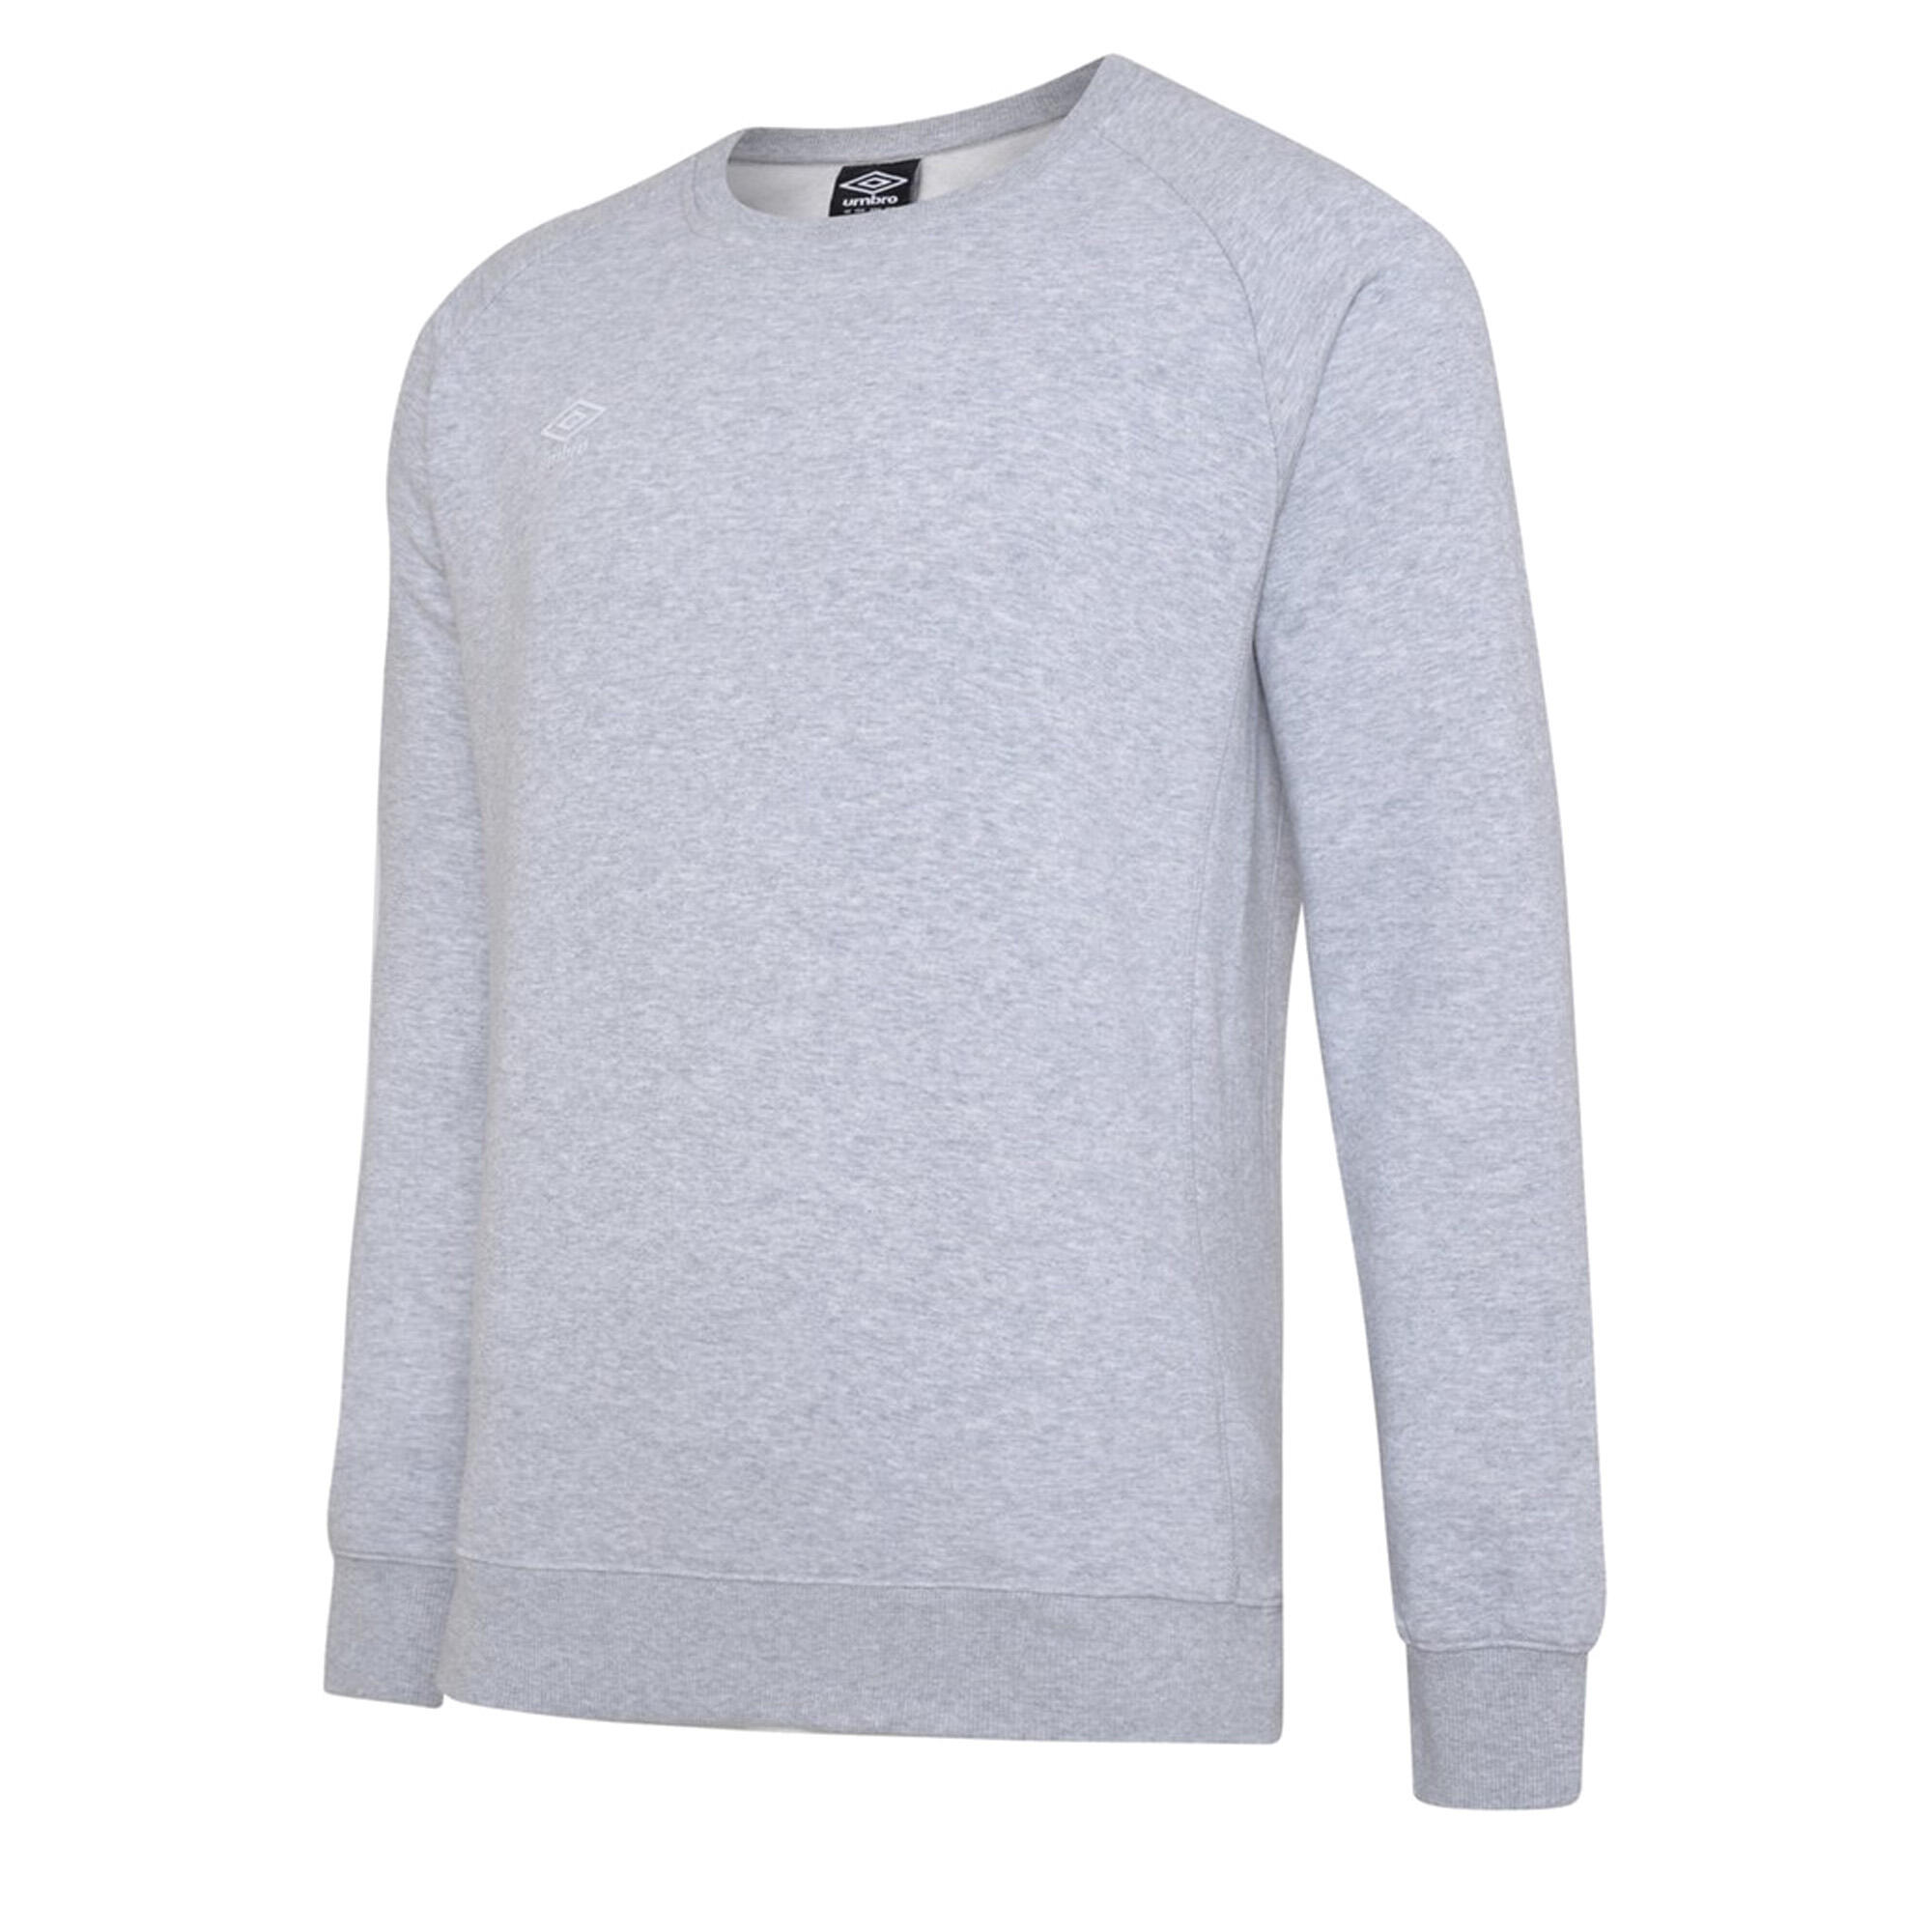 UMBRO Womens/Ladies Club Leisure Sweatshirt (Grey Marl/White)